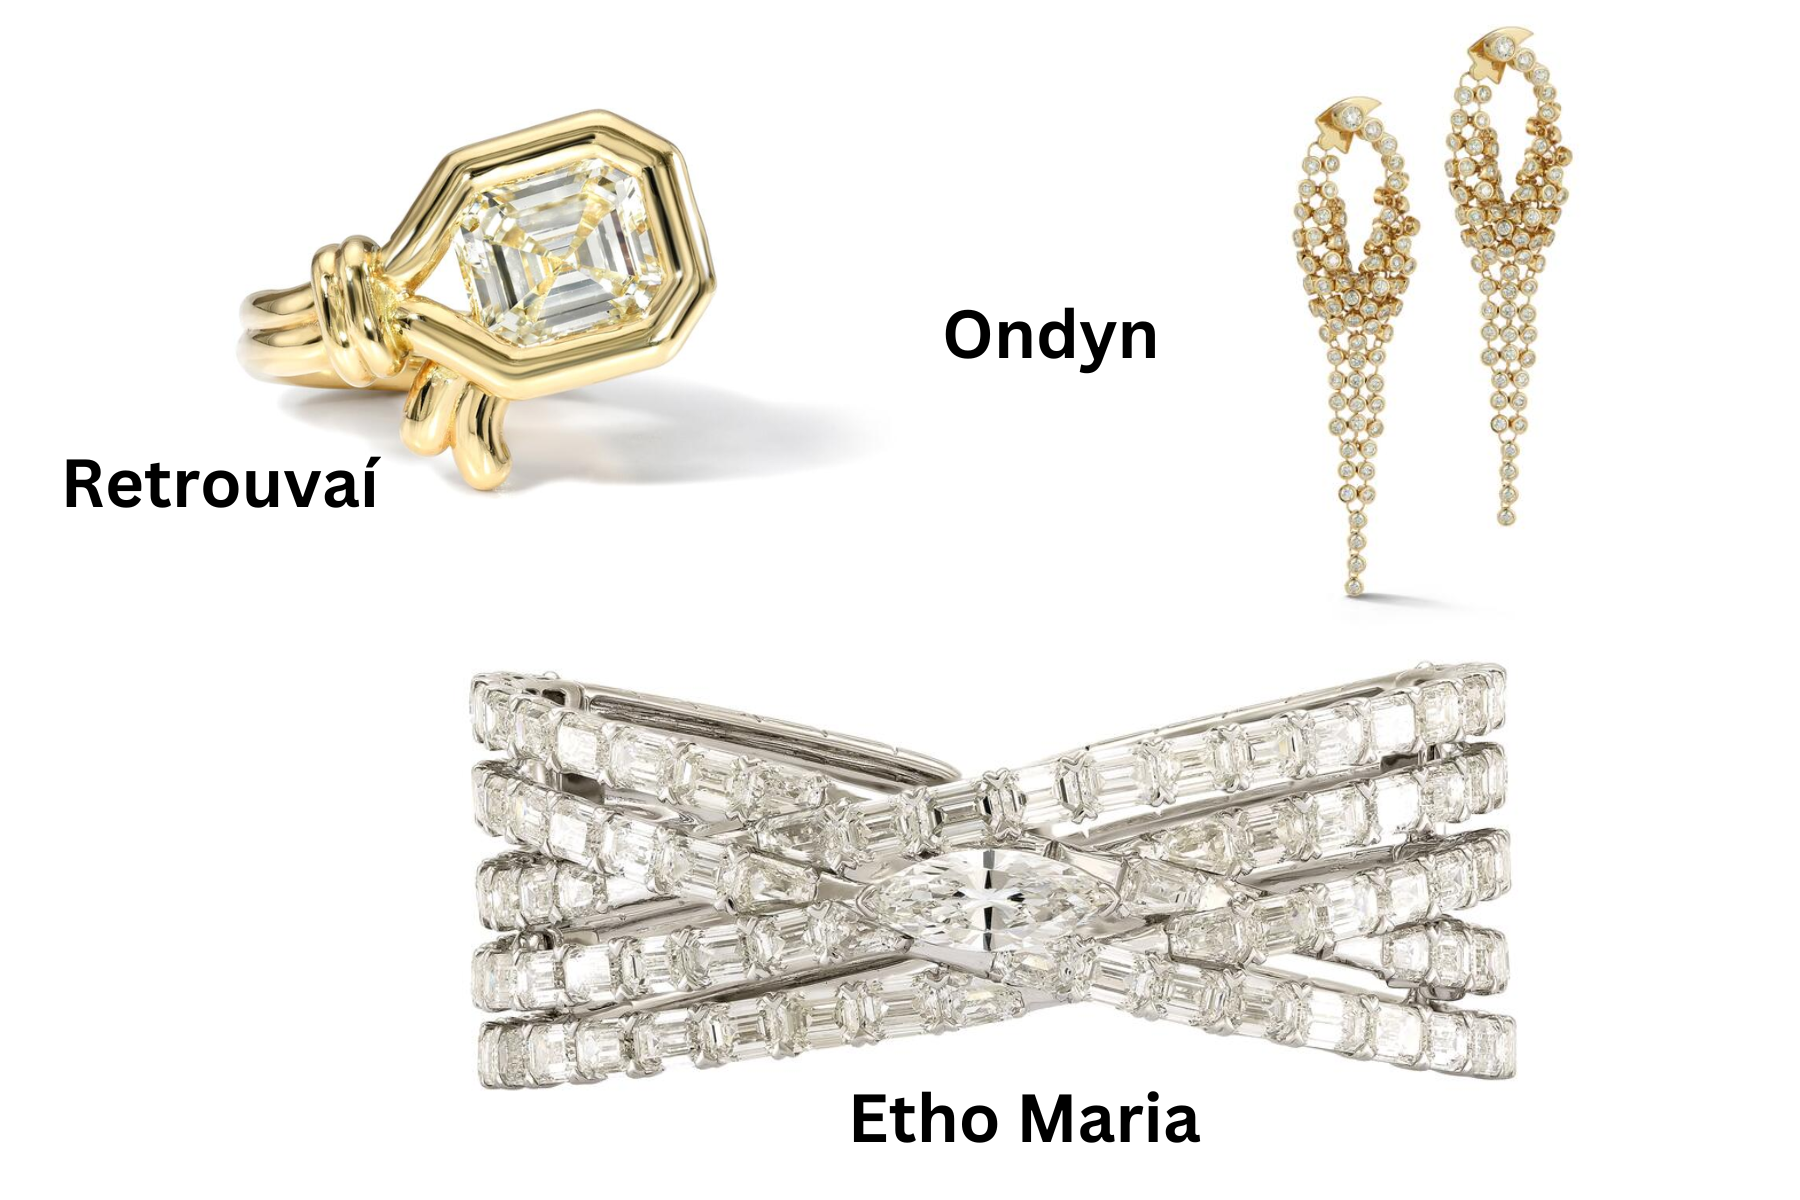 Retrouvaí, Ondyn, and Etho Maria jewelry